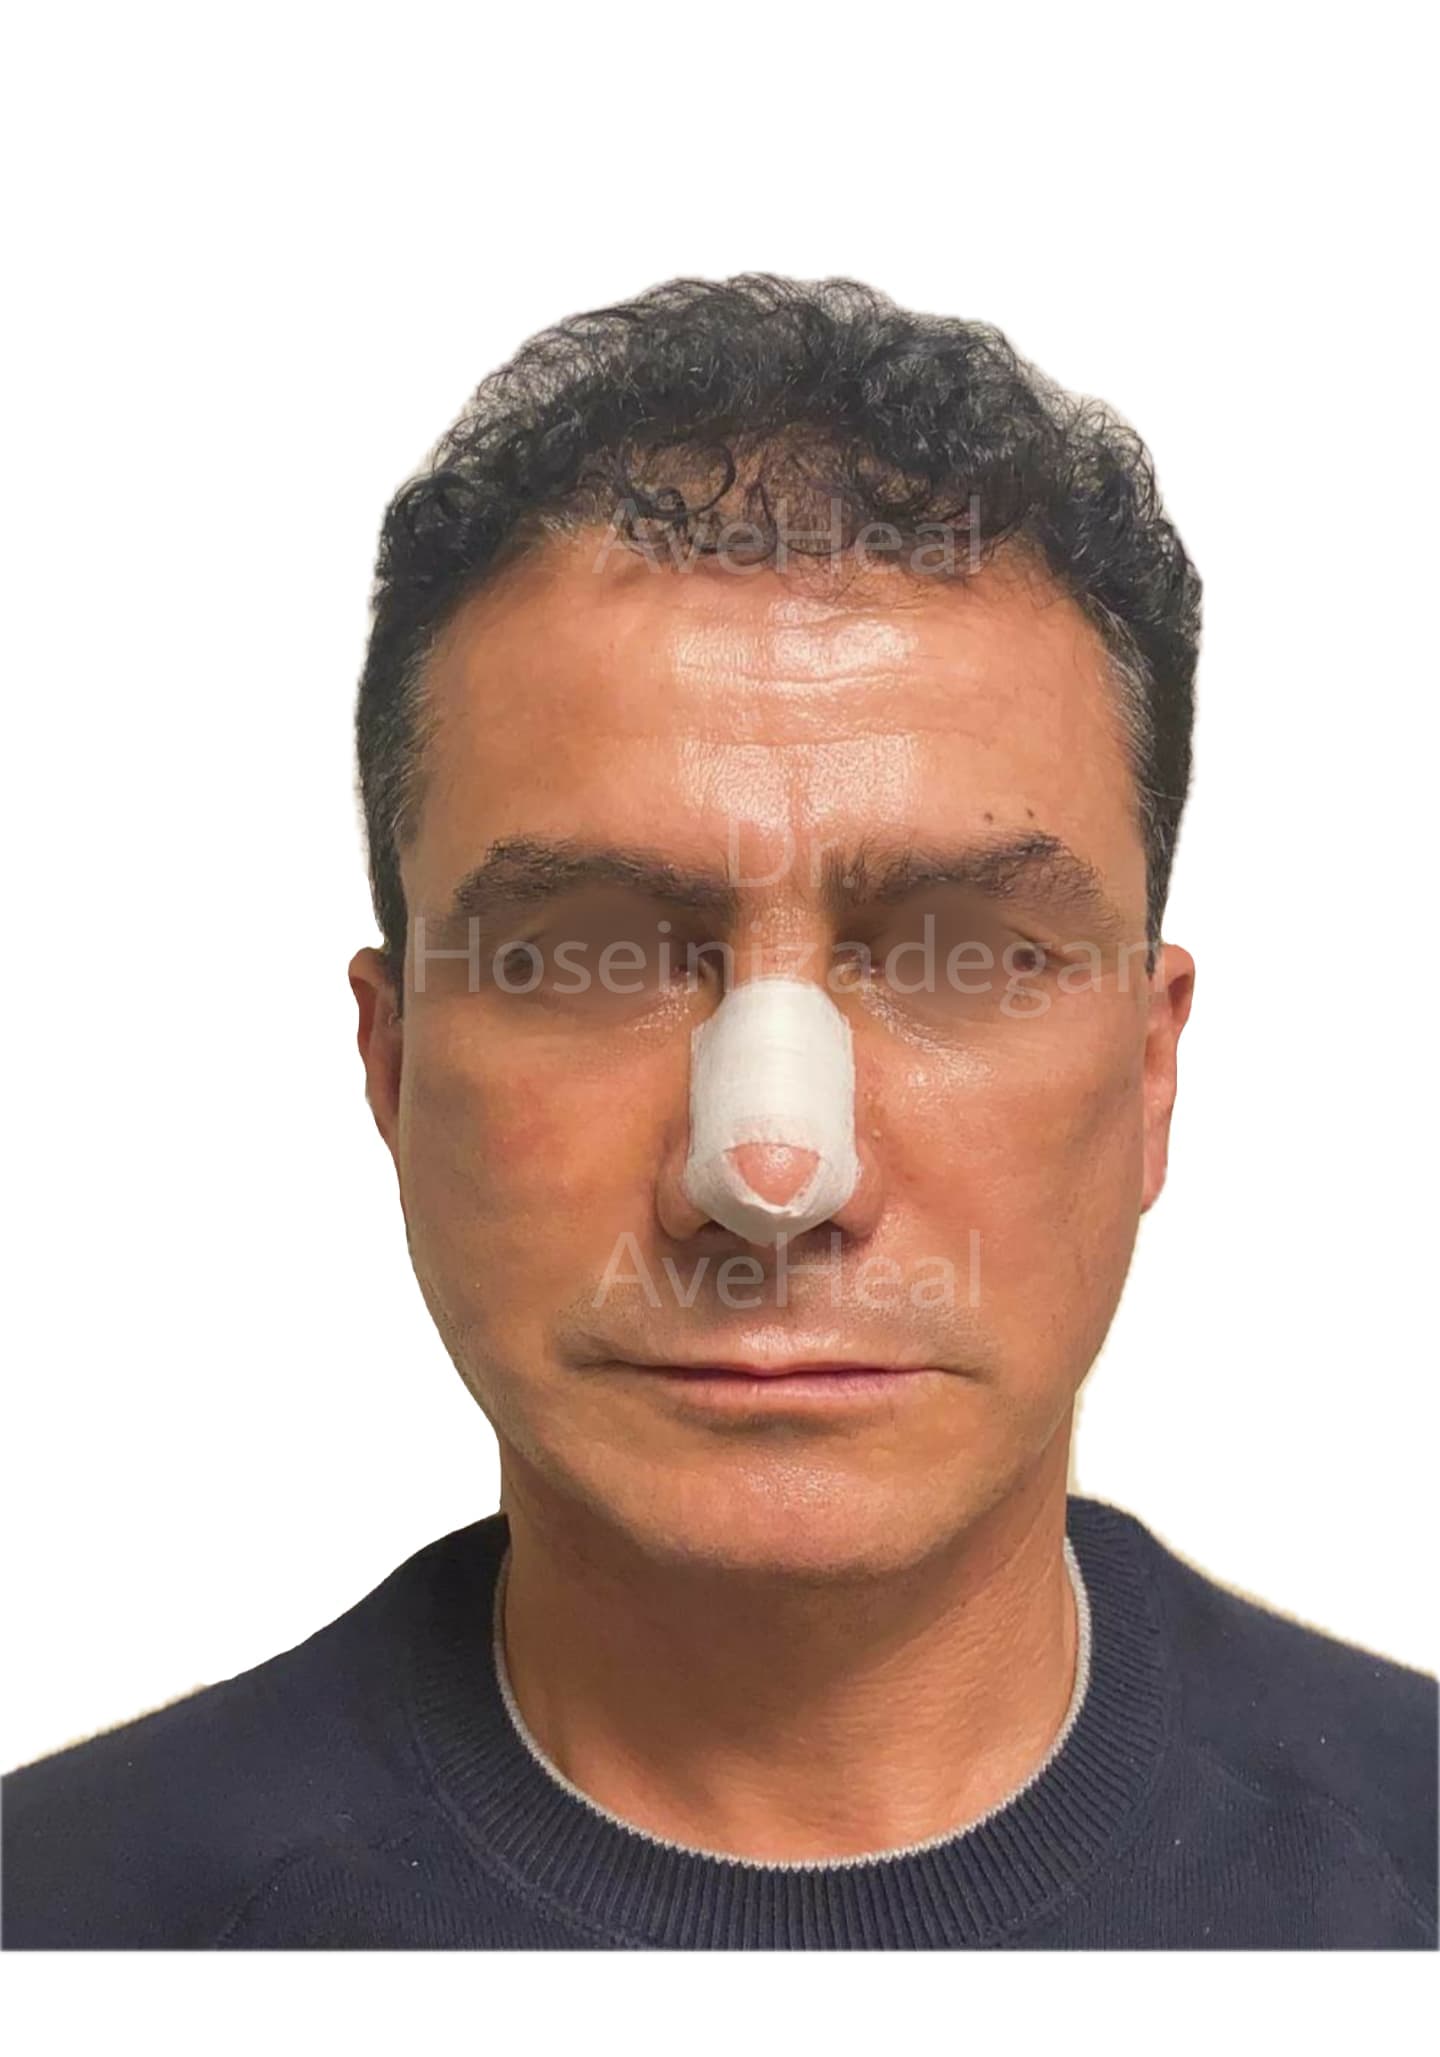 after-face-lift-and-rhinoplasty-dr-fatemeh-hoseini-zadegan-shirazi